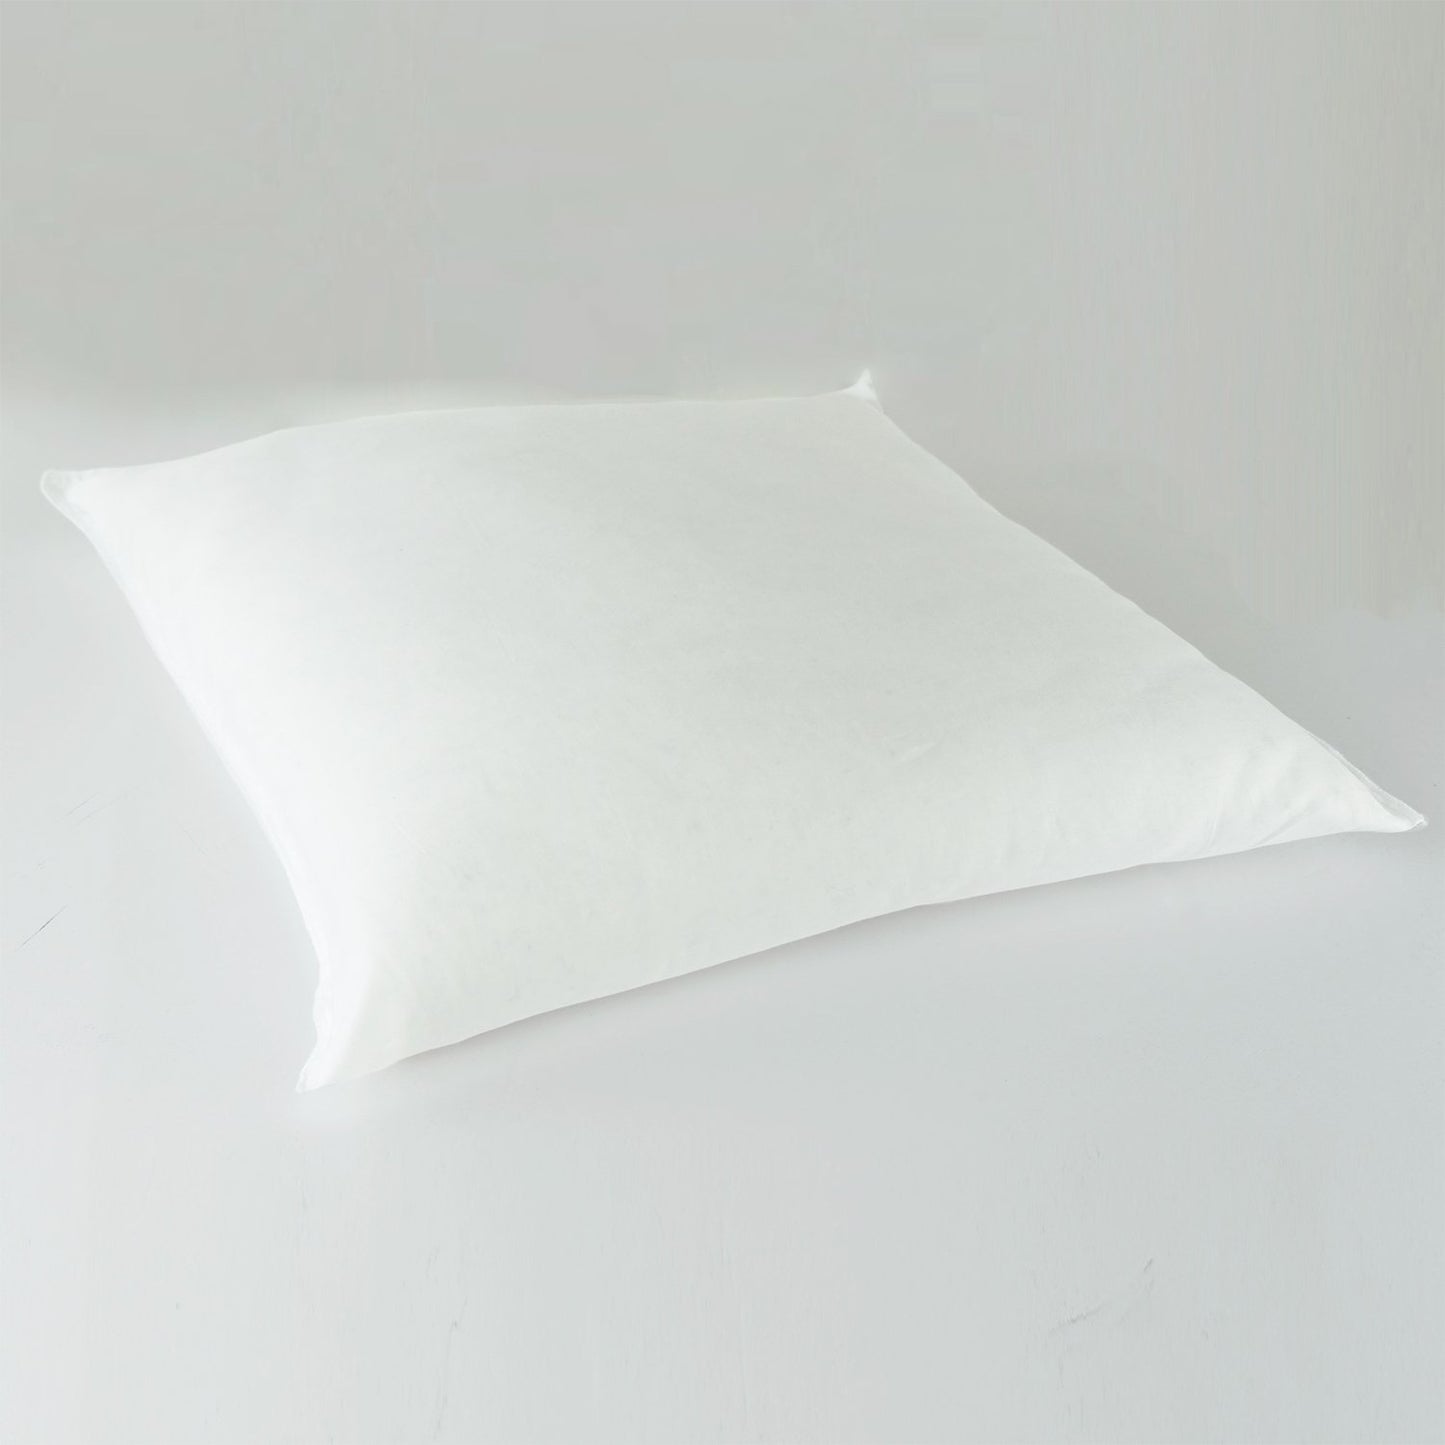 J-Life Seikai Ha Green Zabuton Floor Pillow_Pillows & Shams_Zabuton Floor Pillows_100% Cotton_Reversible_Handmade